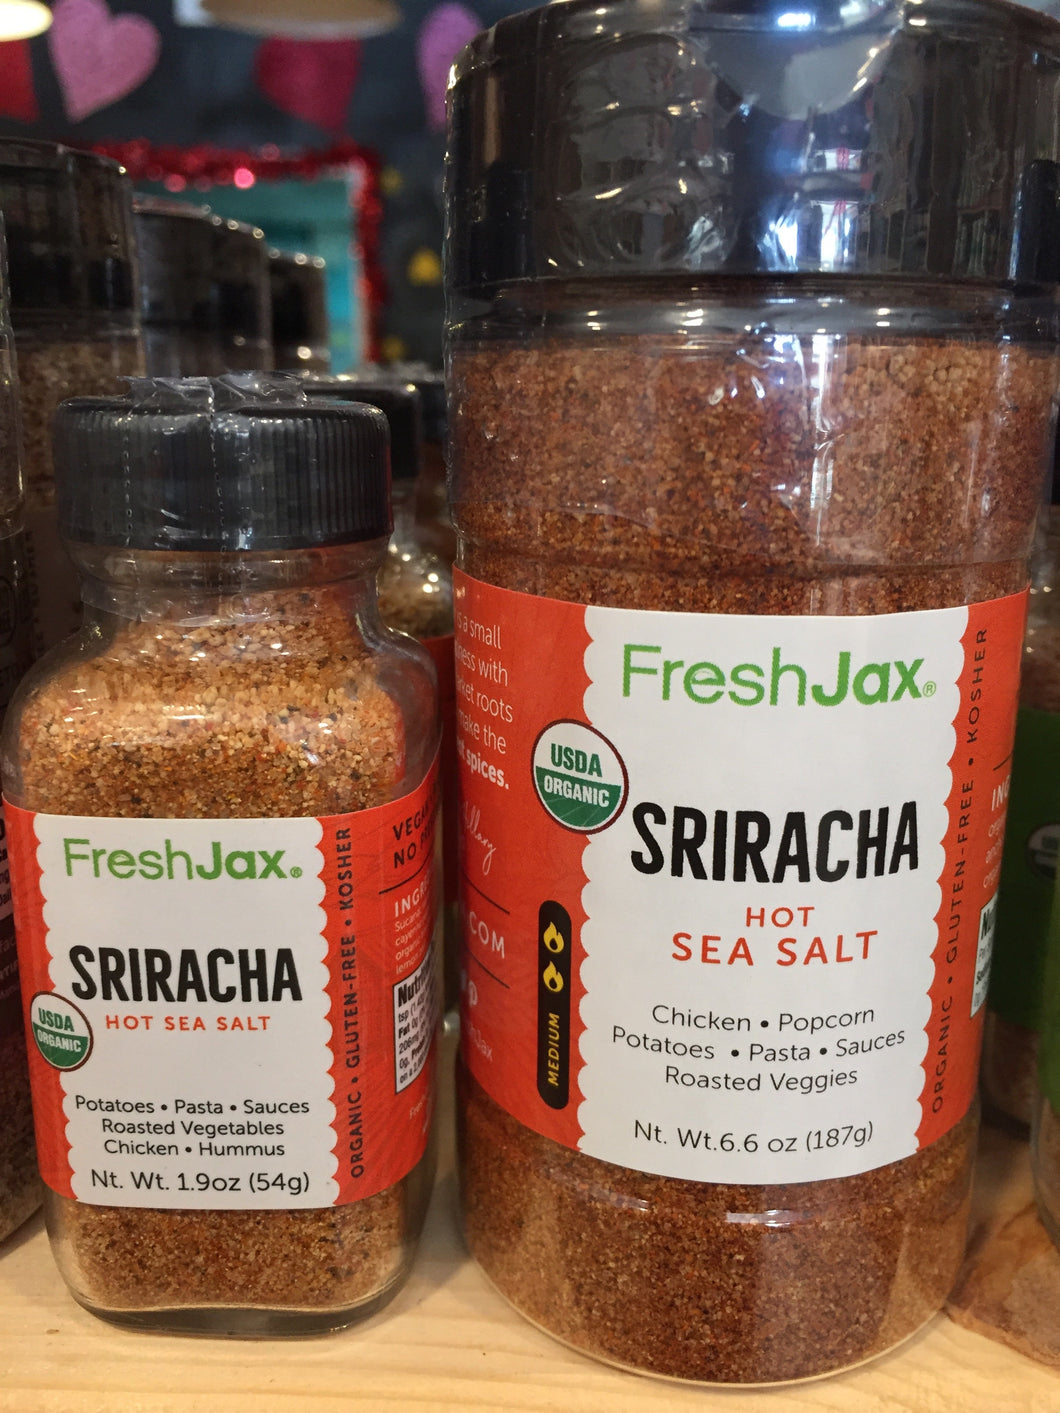 Sriracha Hot Sea Salt: FreshJax at Hoby’s